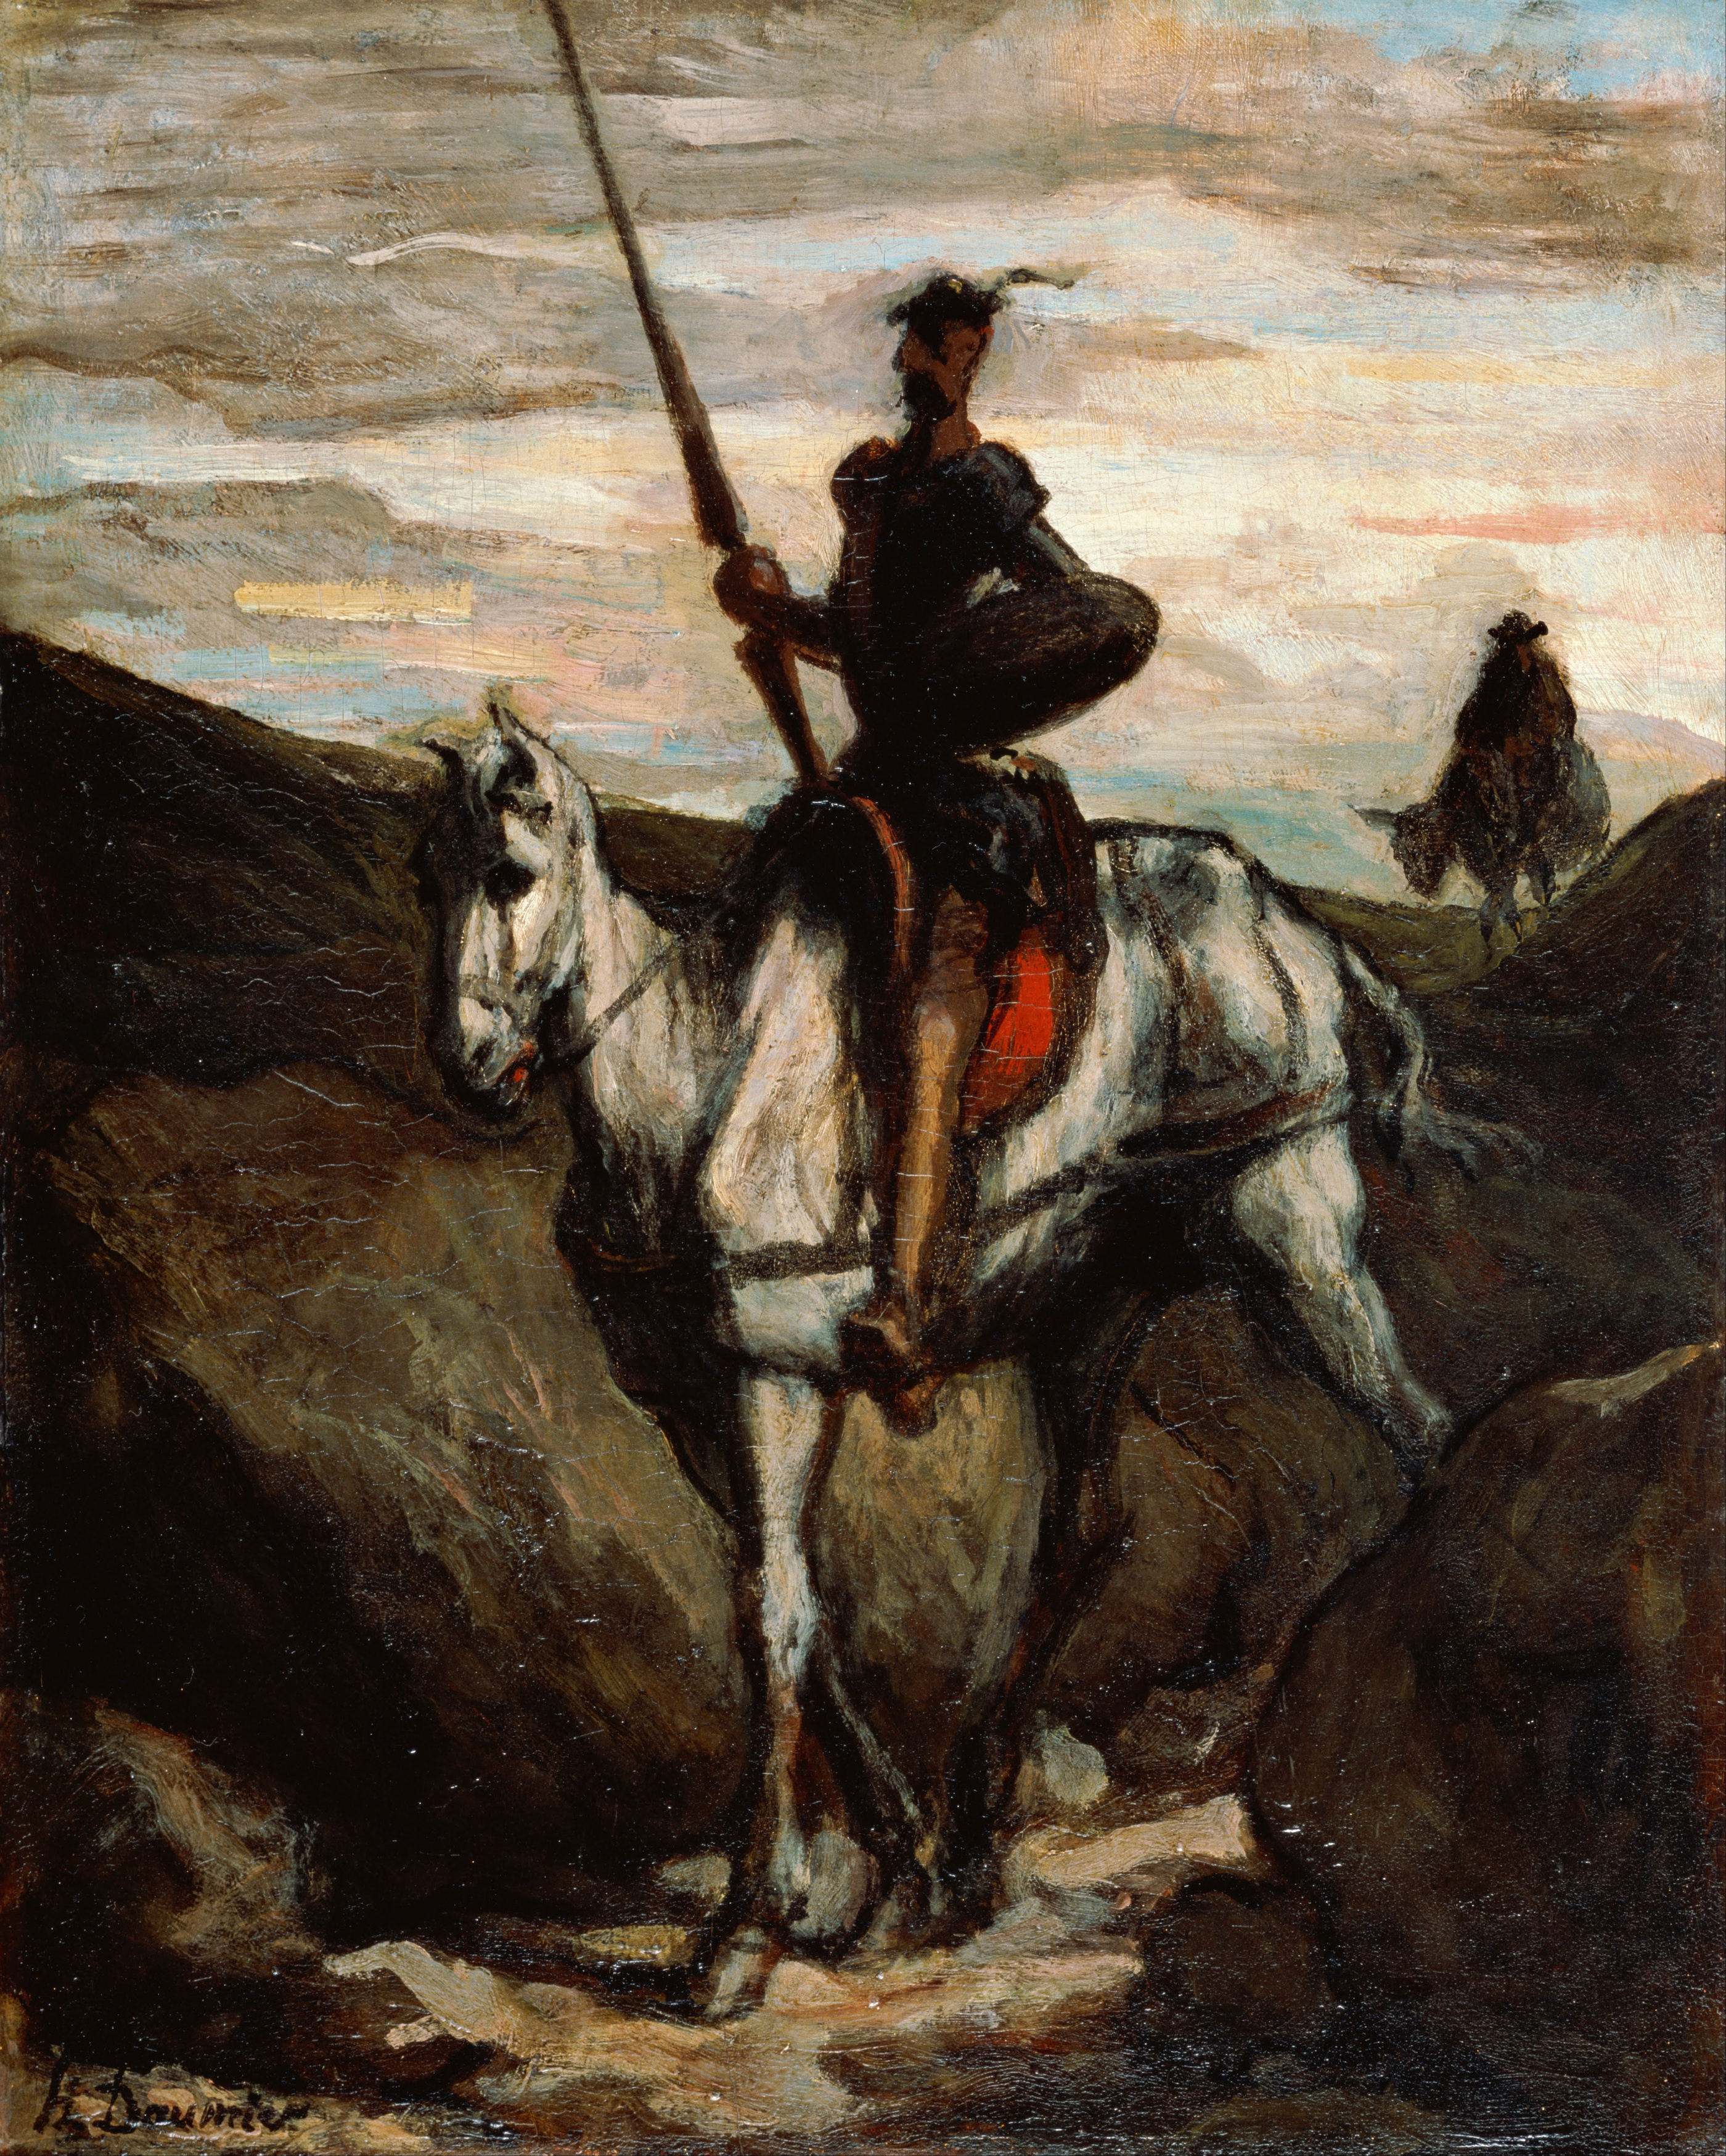 Don Chisciotte nelle montagne by Honore Daumier - c. 1850 